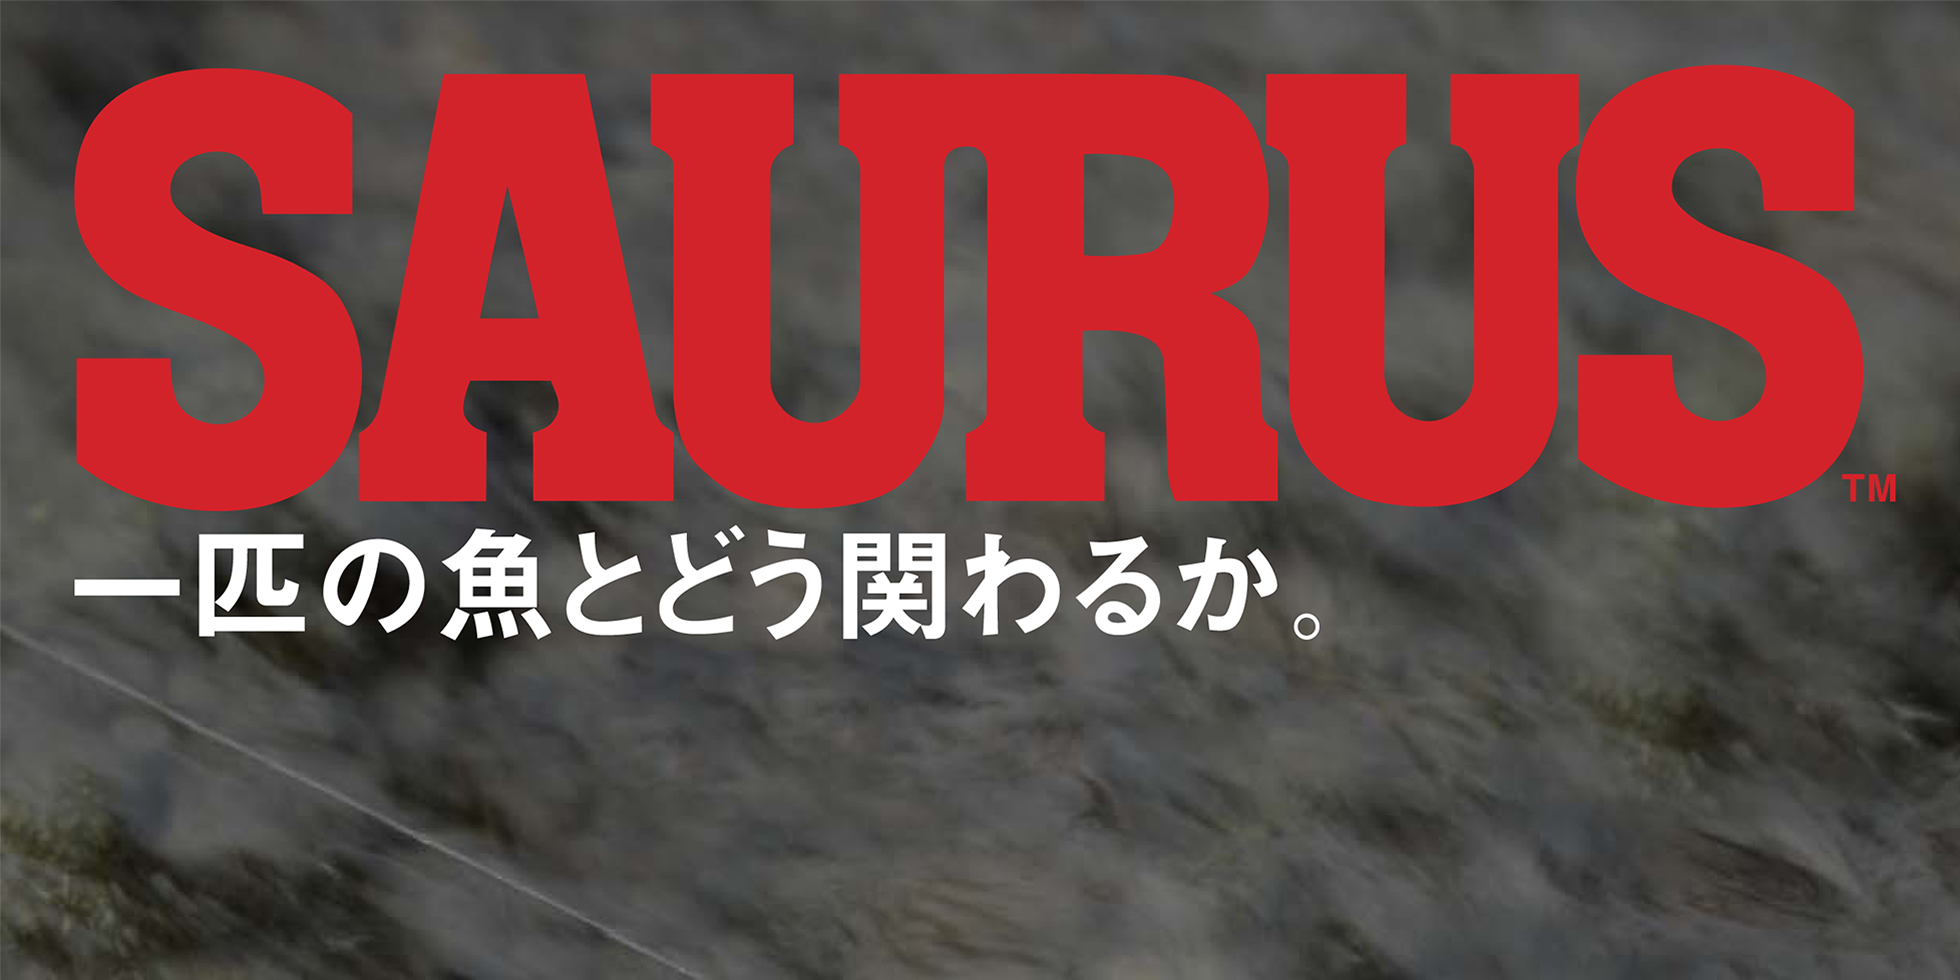 SAURUS Digital Catalog